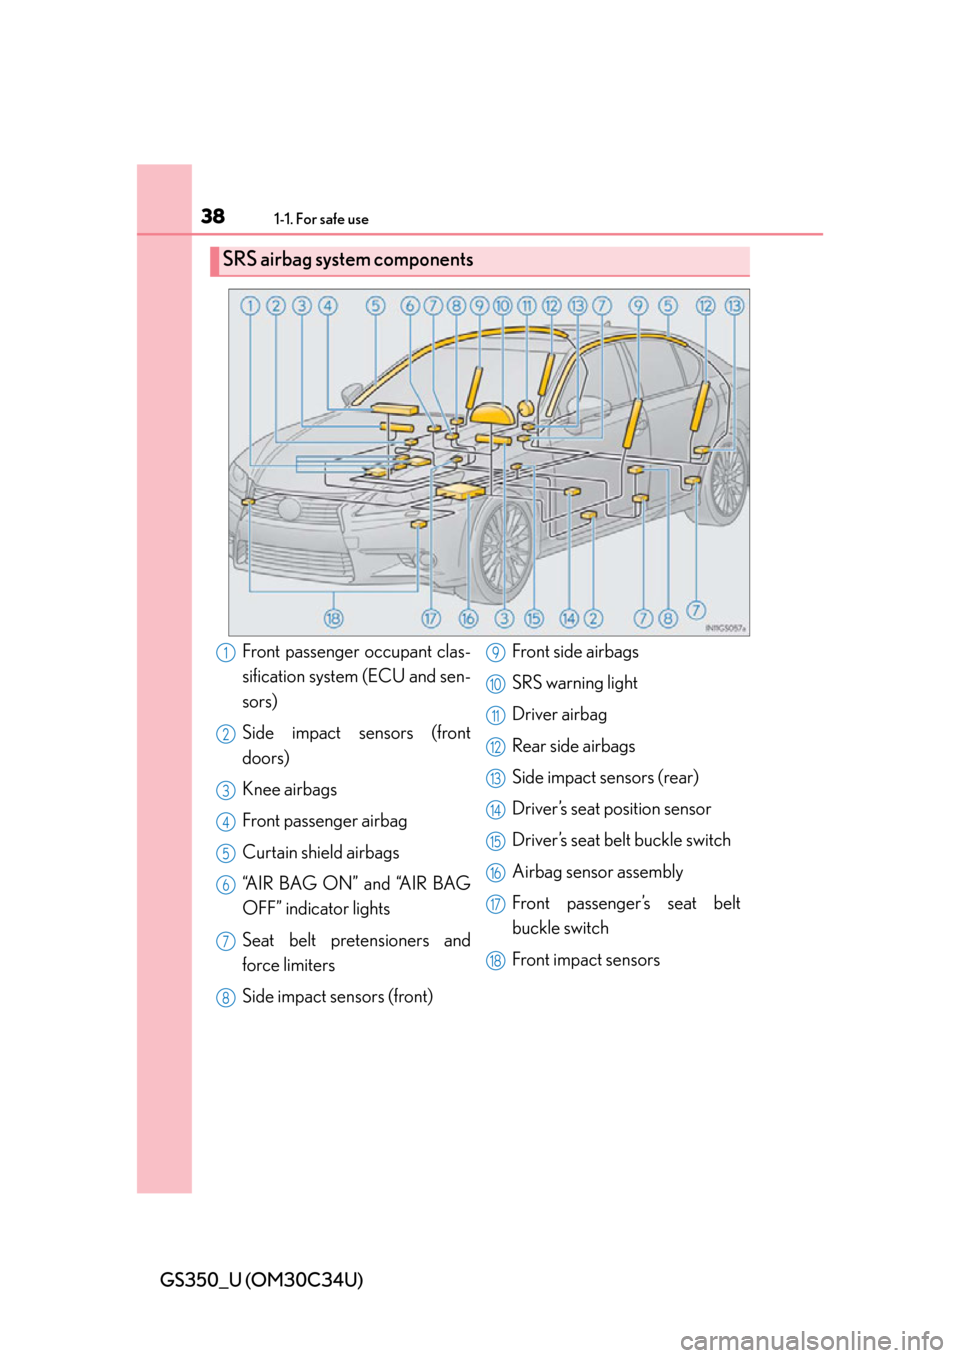 Lexus GS350 2013  Theft deterrent system / LEXUS 2013 GS350 OWNERS MANUAL (OM30C34U) 381-1. For safe use
GS350_U (OM30C34U)
SRS airbag system components
Front passenger occupant clas-
sification system (ECU and sen-
sors)
Side impact sensors (front
doors)
Knee airbags
Front passenger 